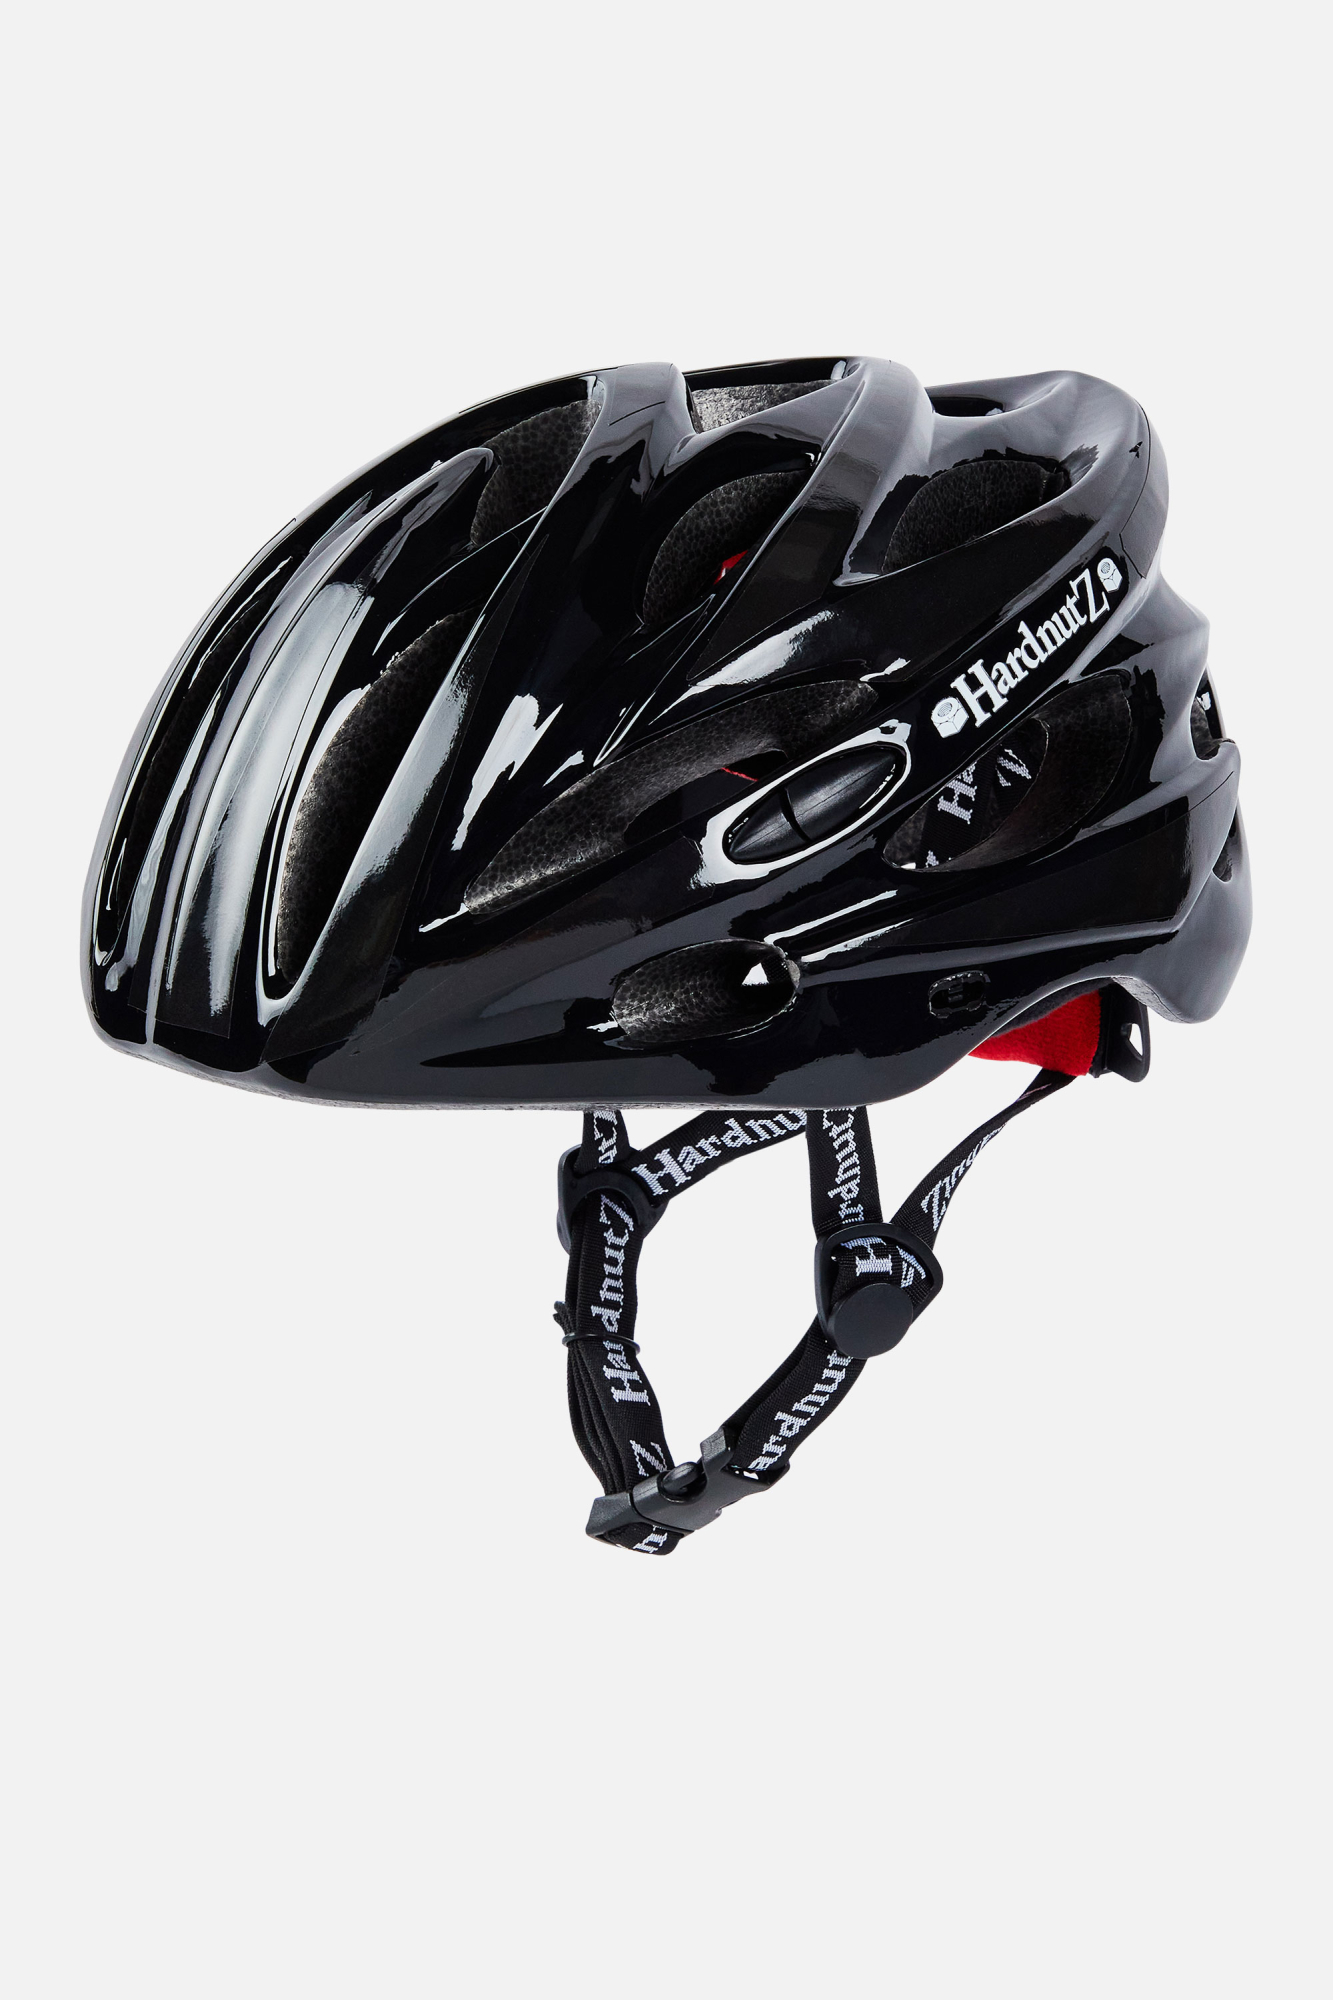 Hardnutz Unisex Cycle Helmet Black - Size: 54-61